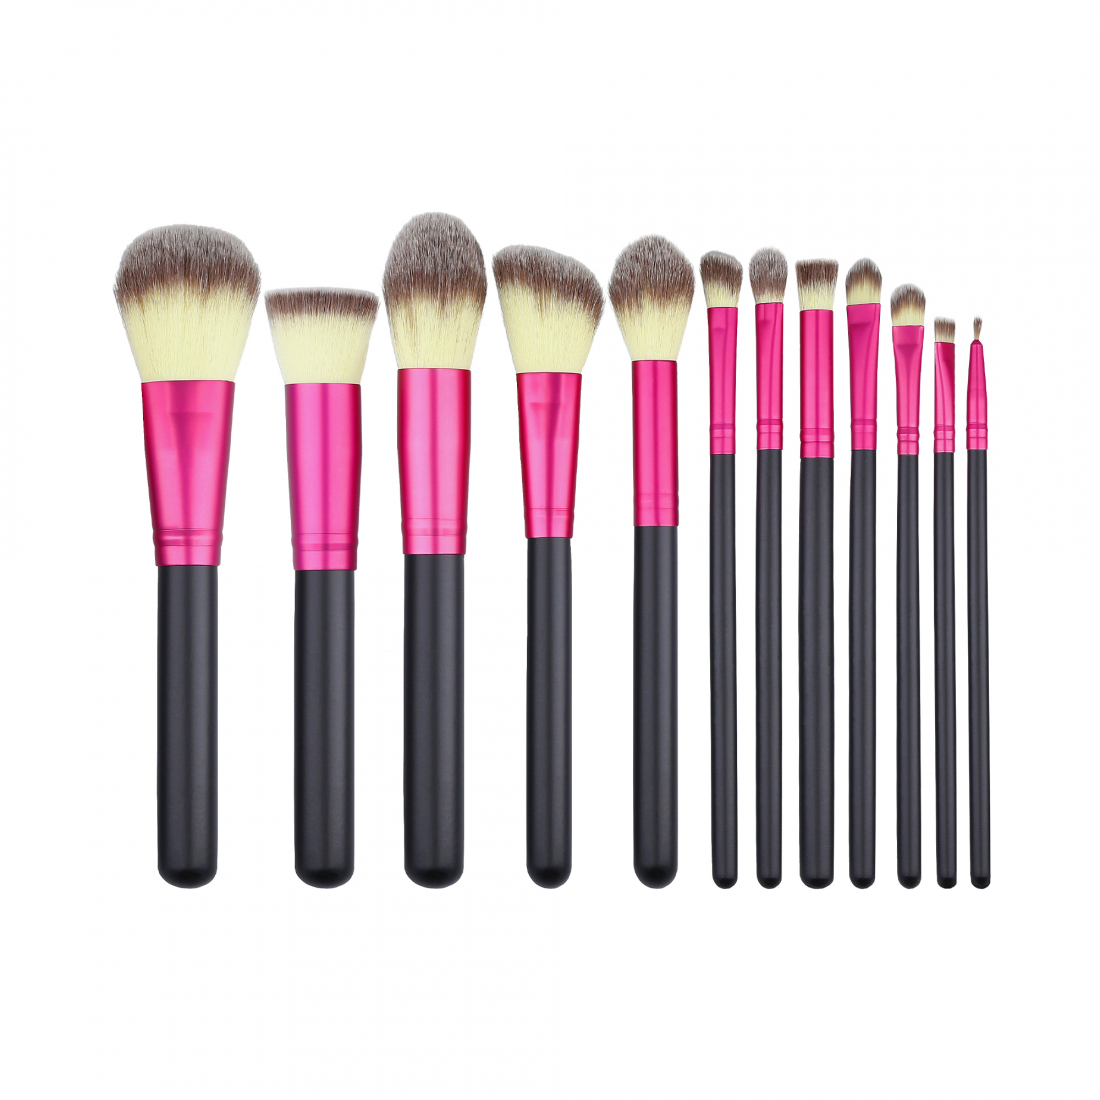 Make-up Brush Set - 12 Pieces